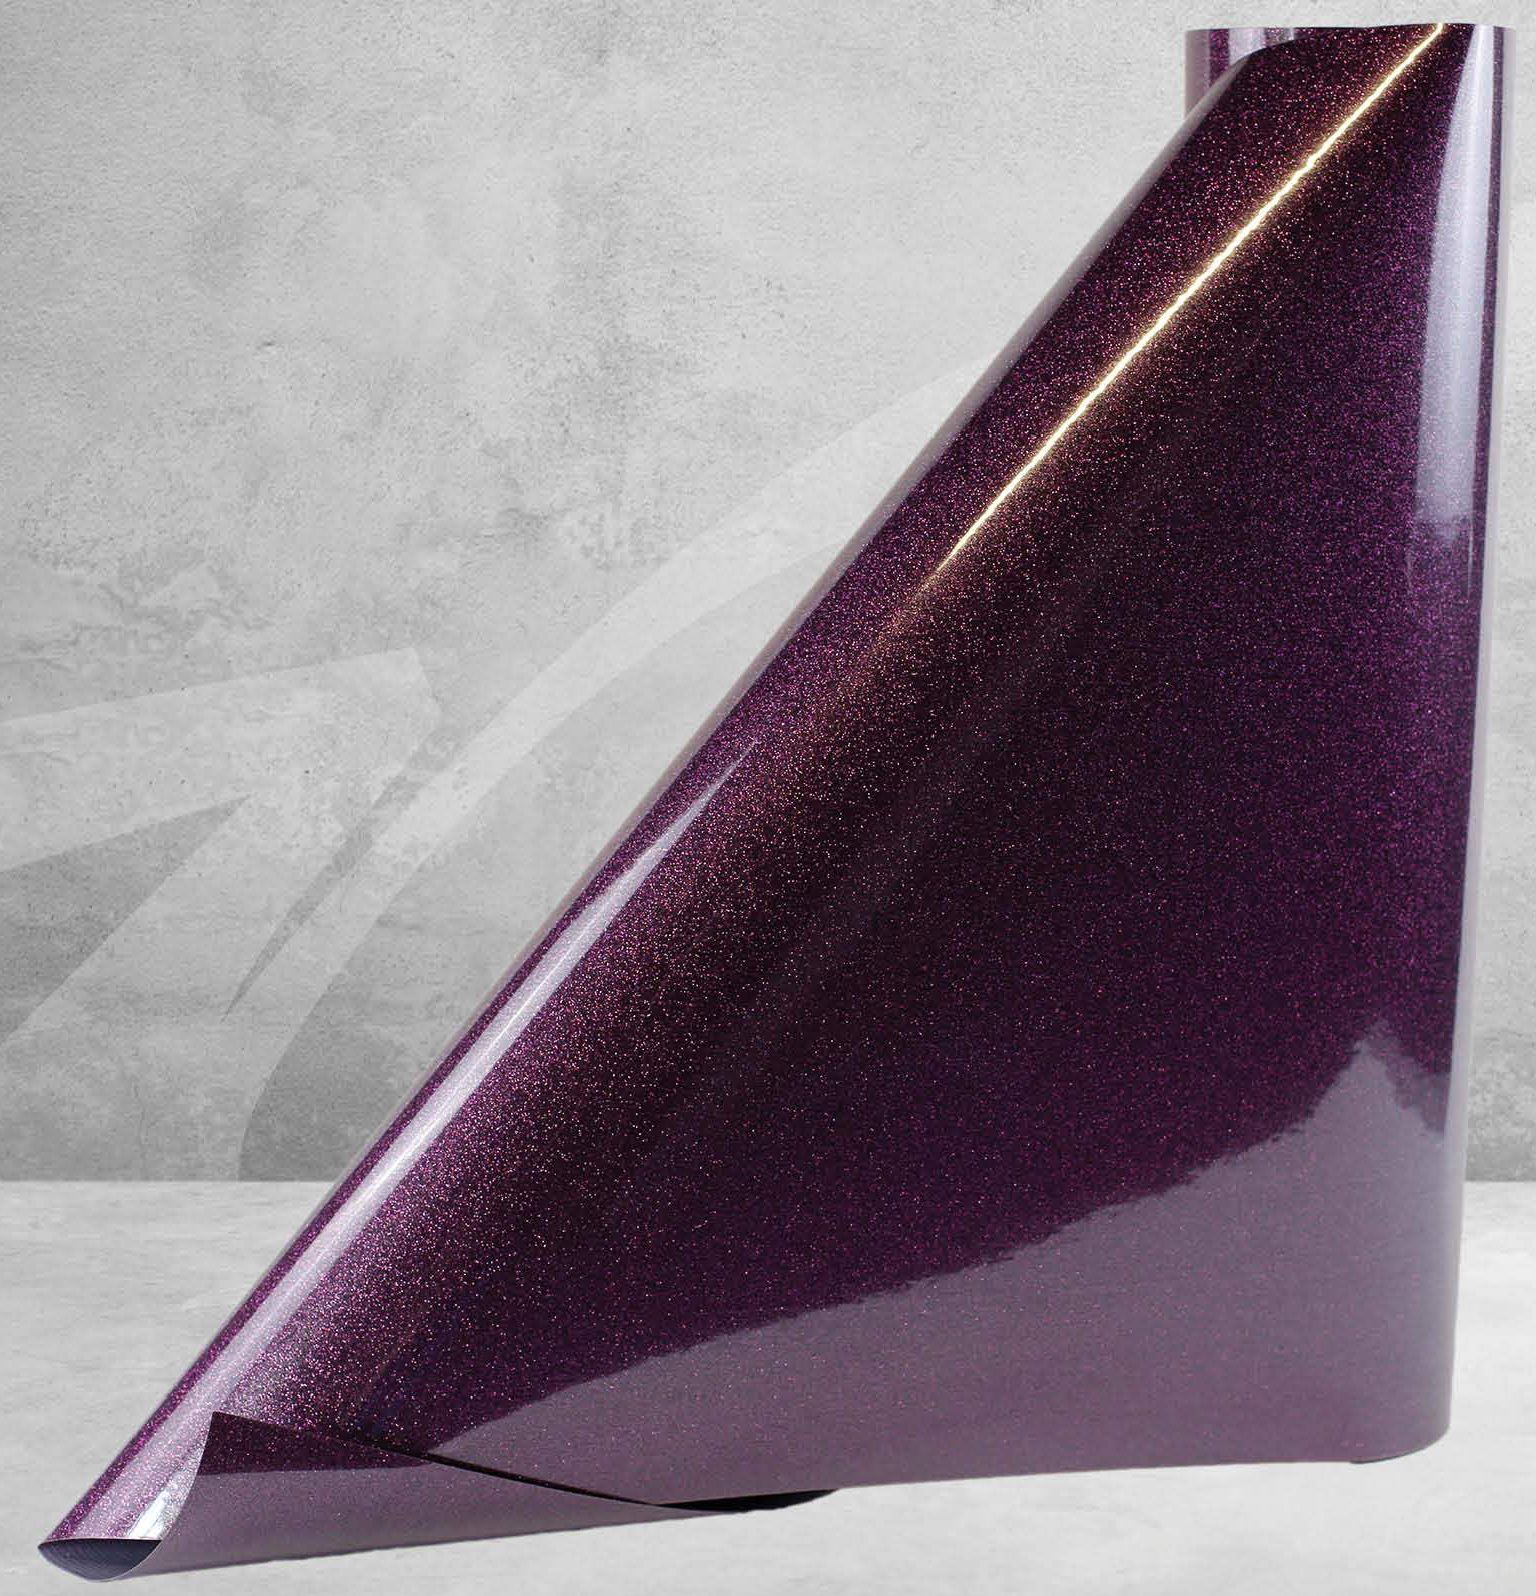 GlitterFlexULTRA Dk Purple - Specialty Materials GlitterFlex Ultra Heat Transfer Film